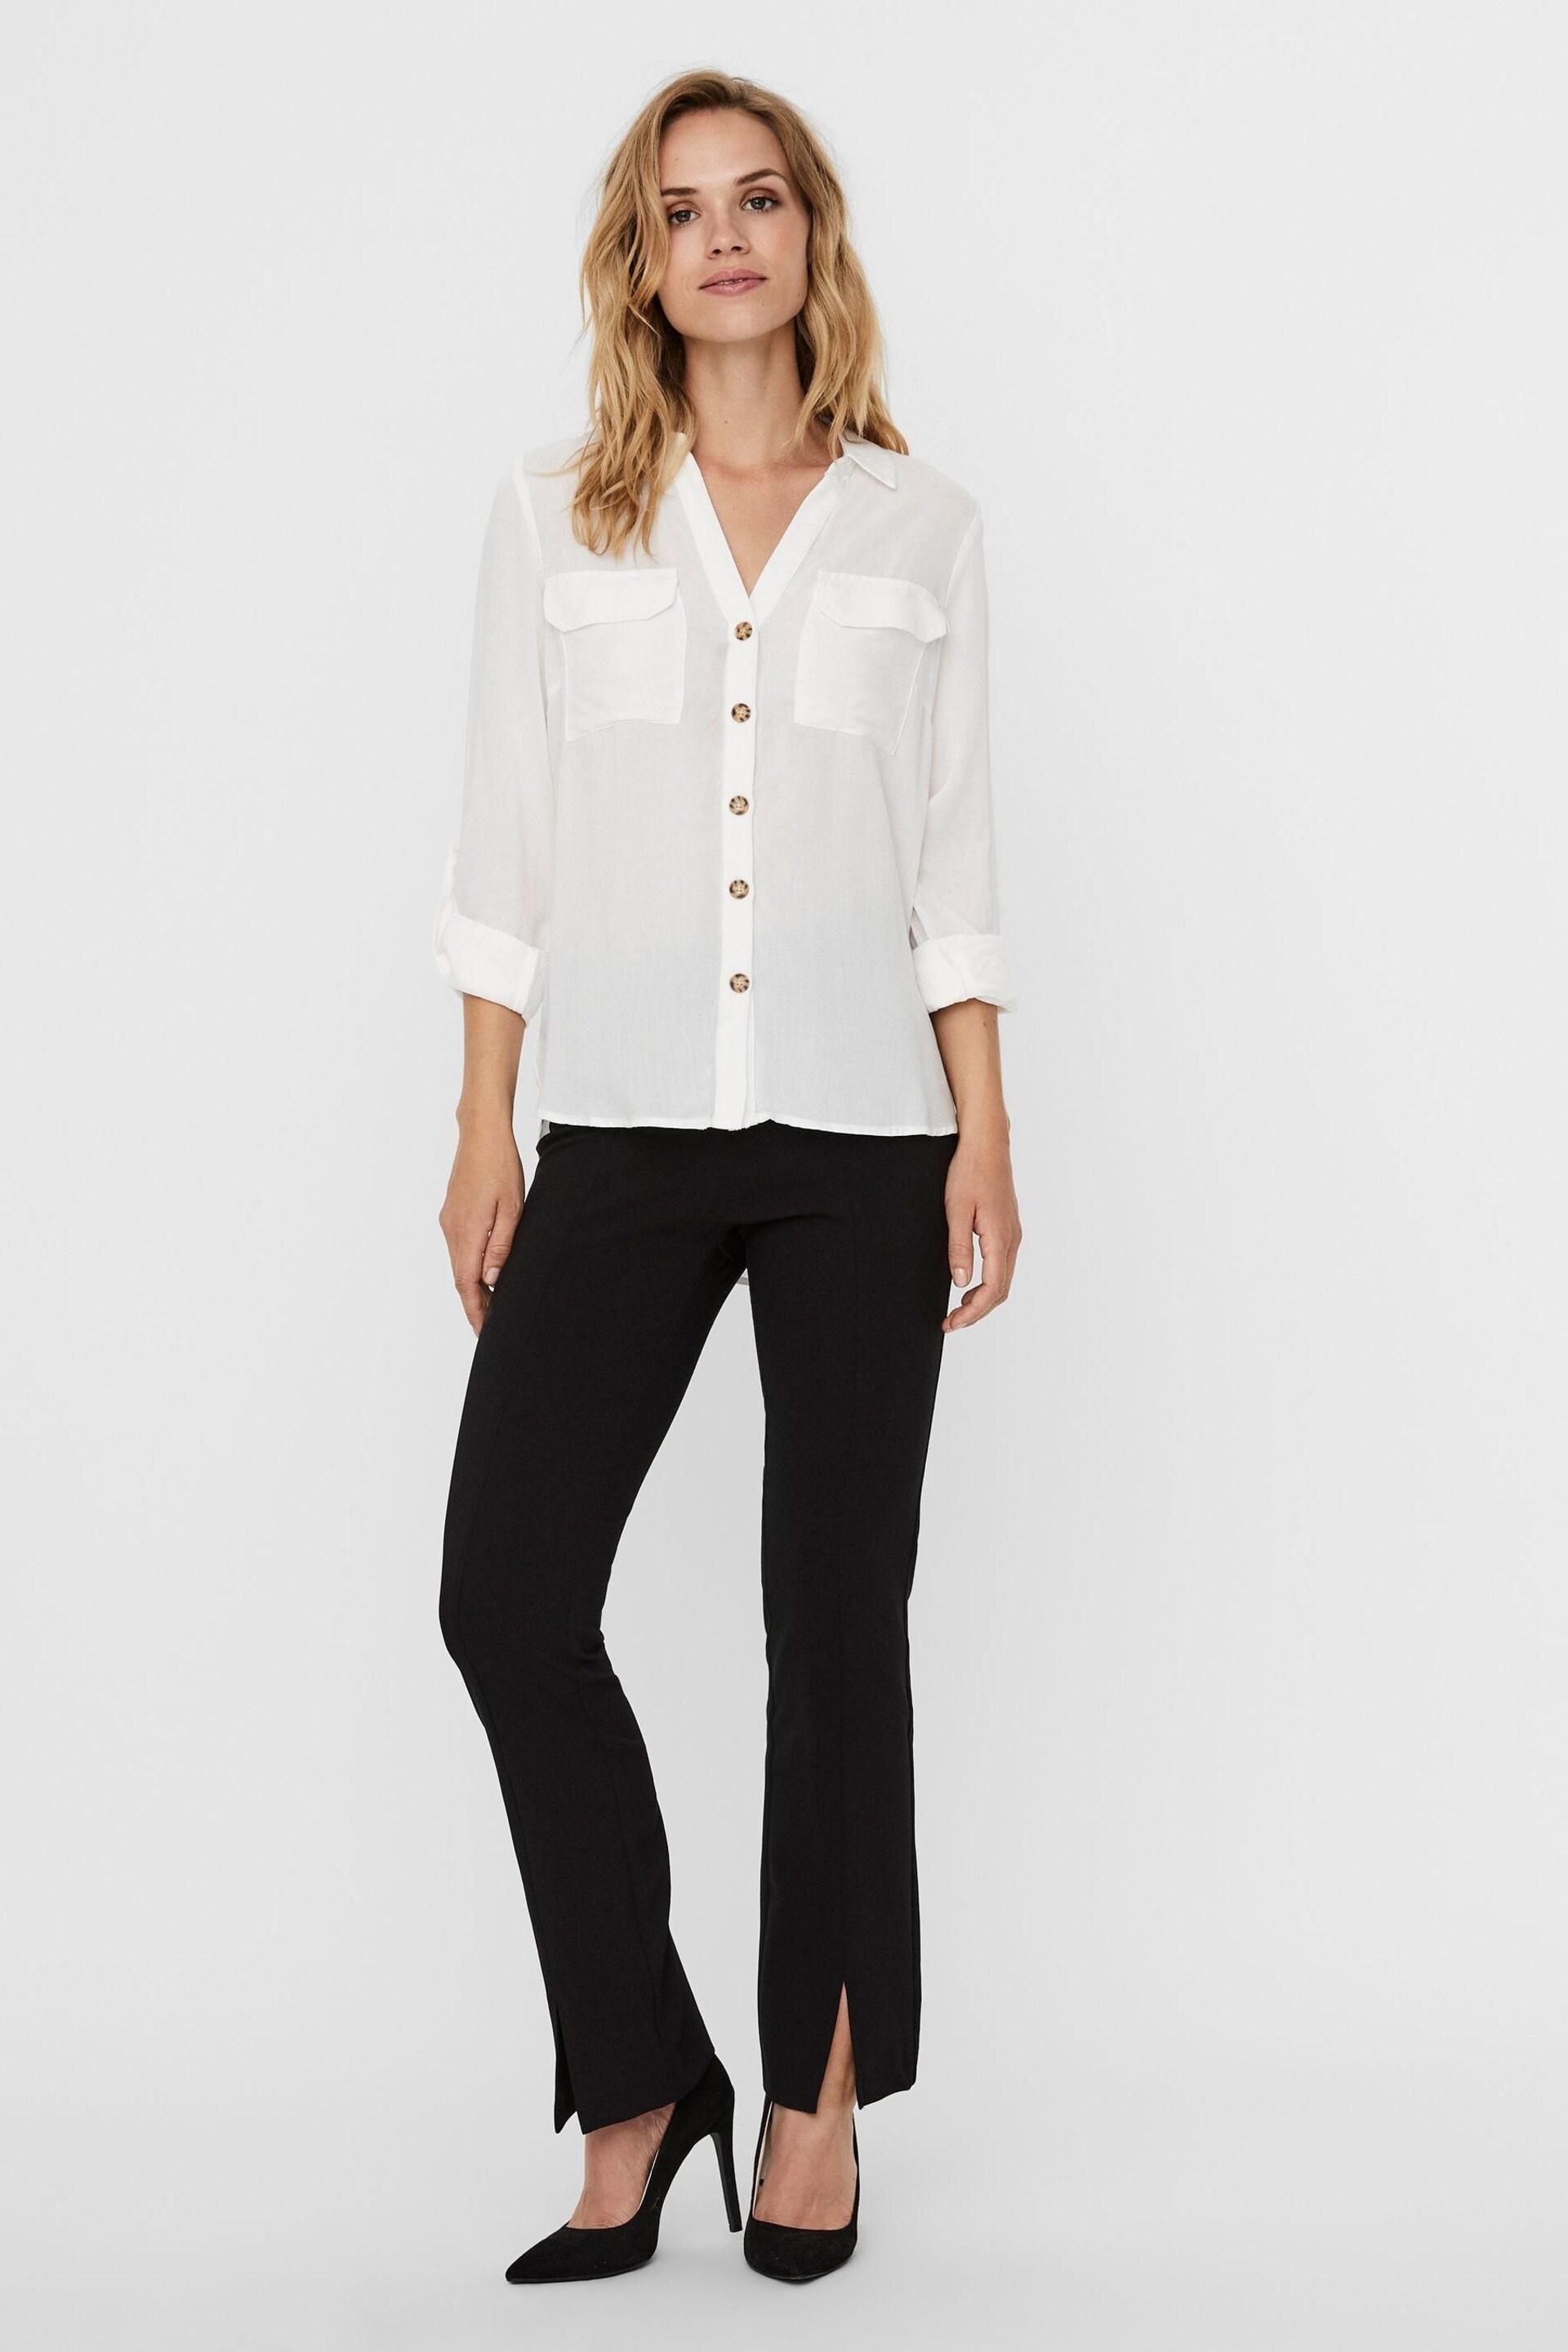 VERO MODA White Button Up Shirt - Image 3 of 6